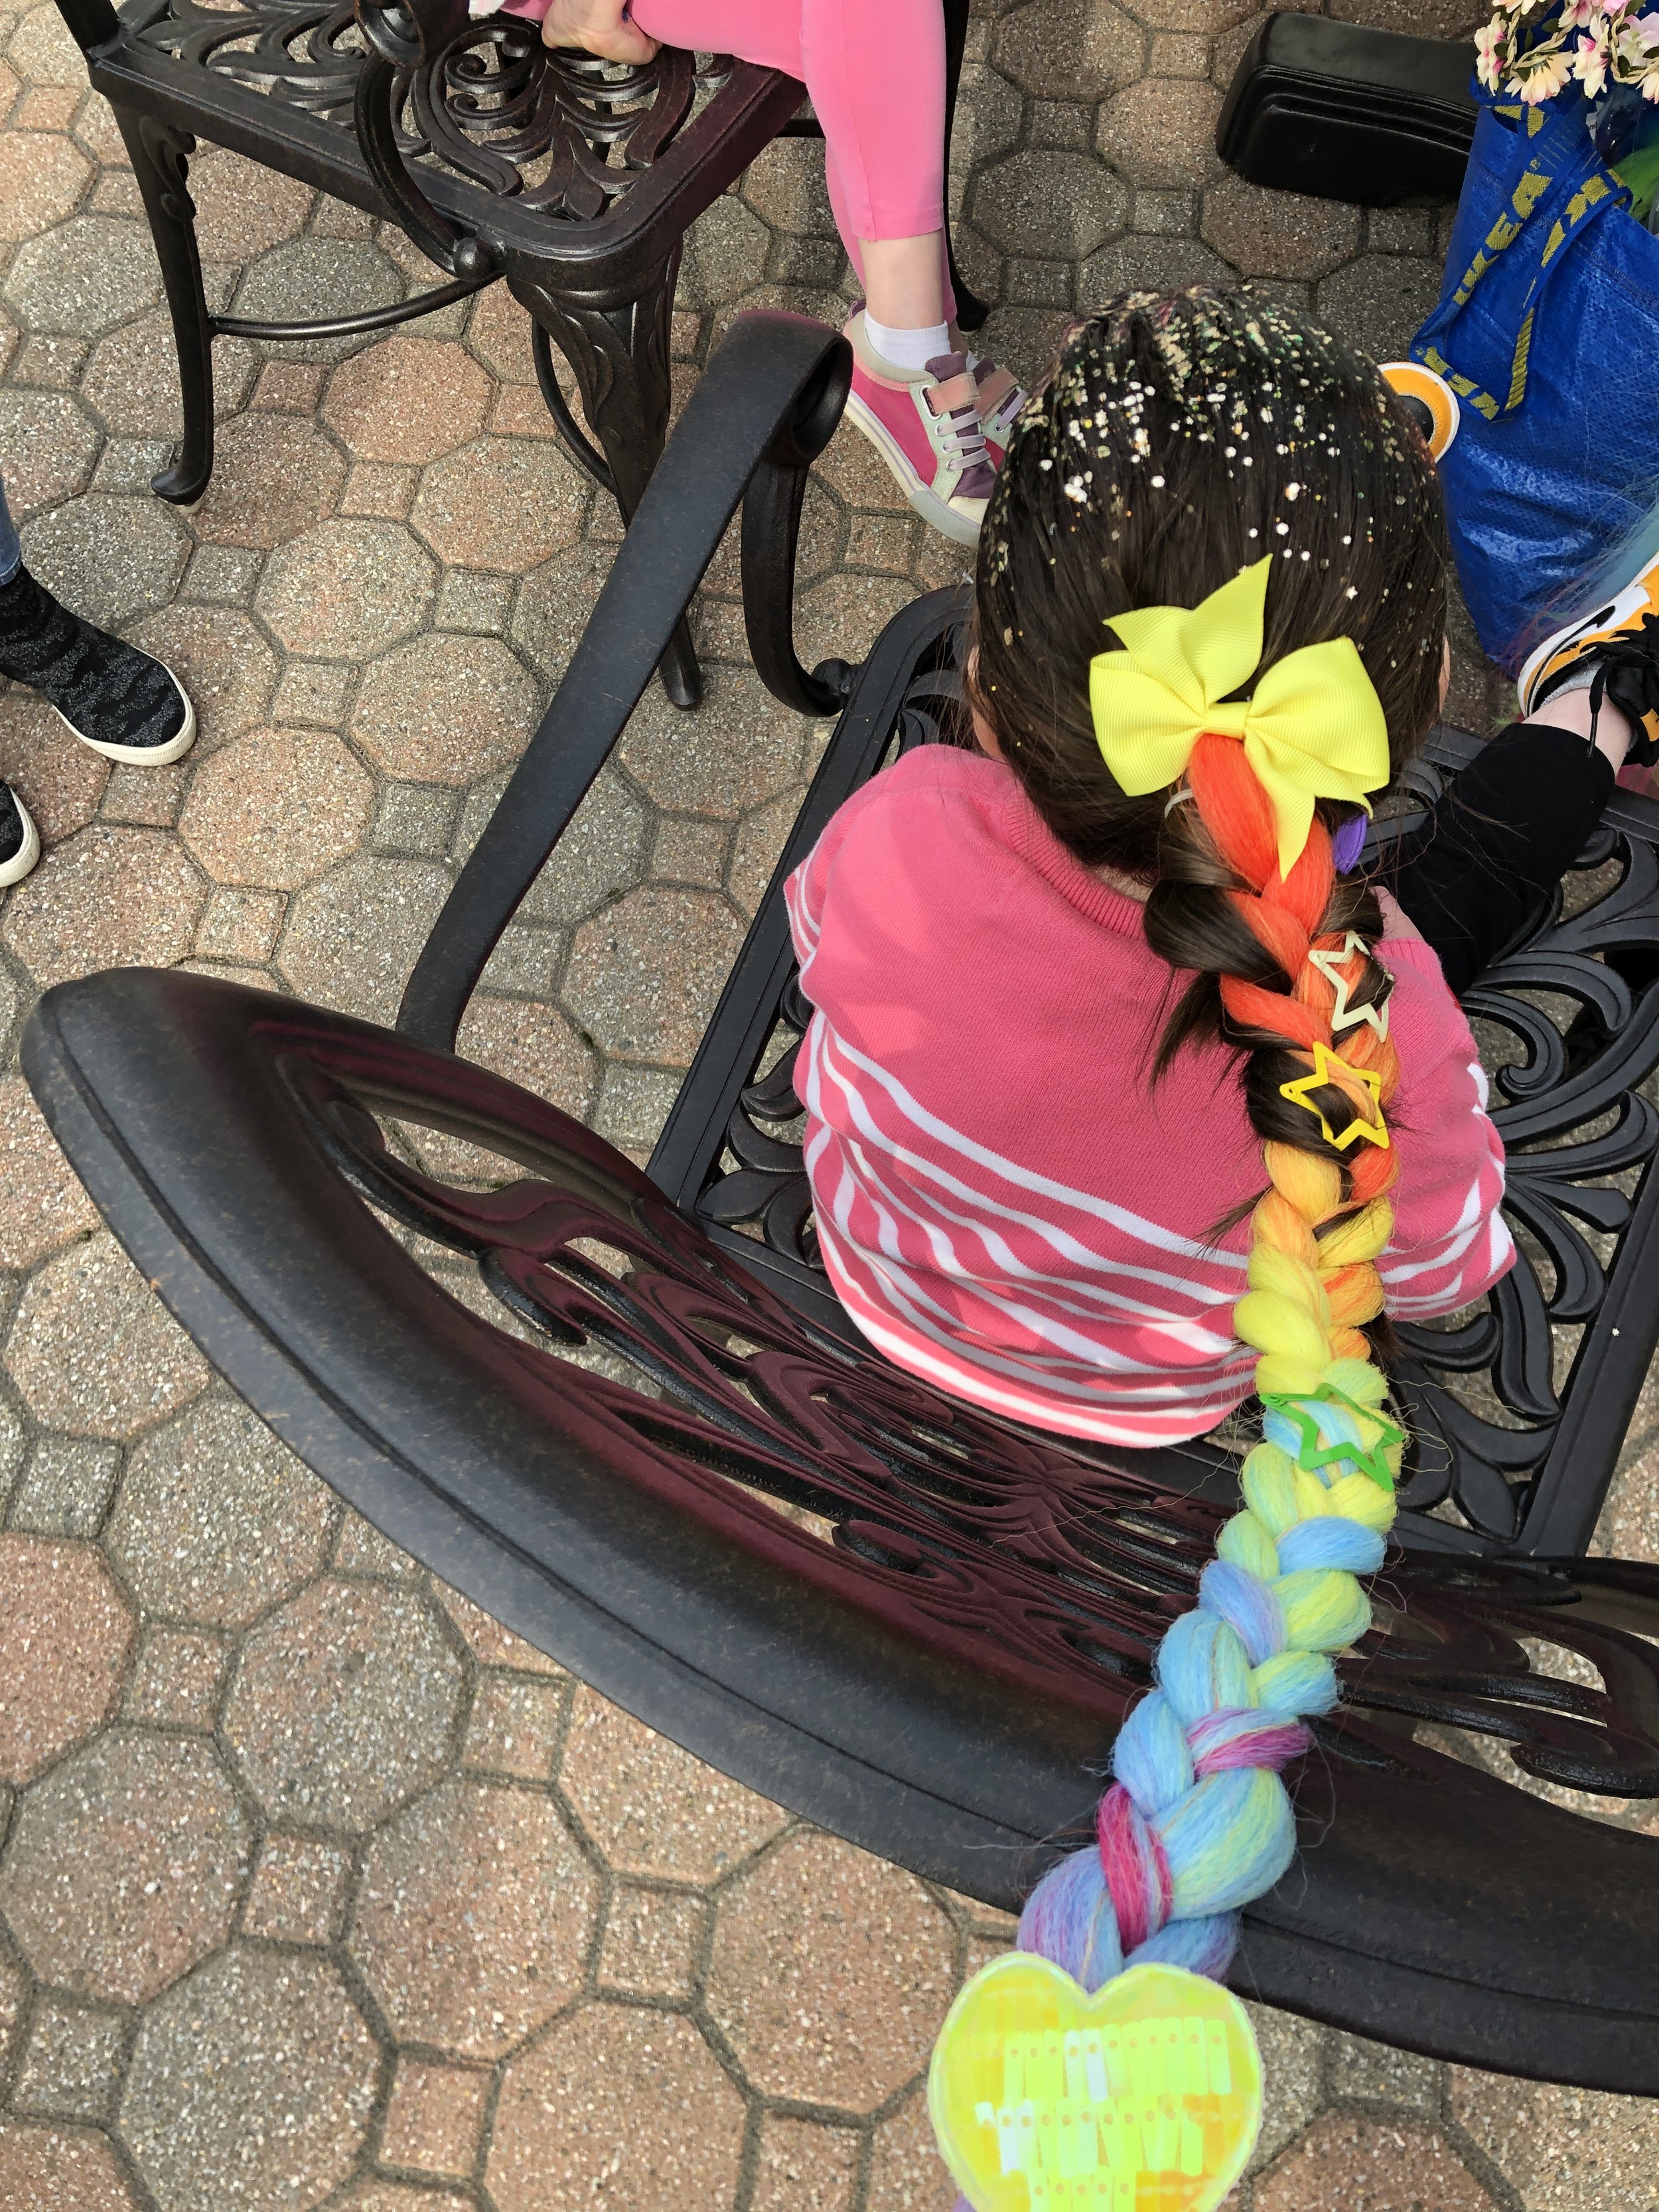 Hair Braiding with Clips and rainbow hair for birthday party near me Scarsdale.JPG